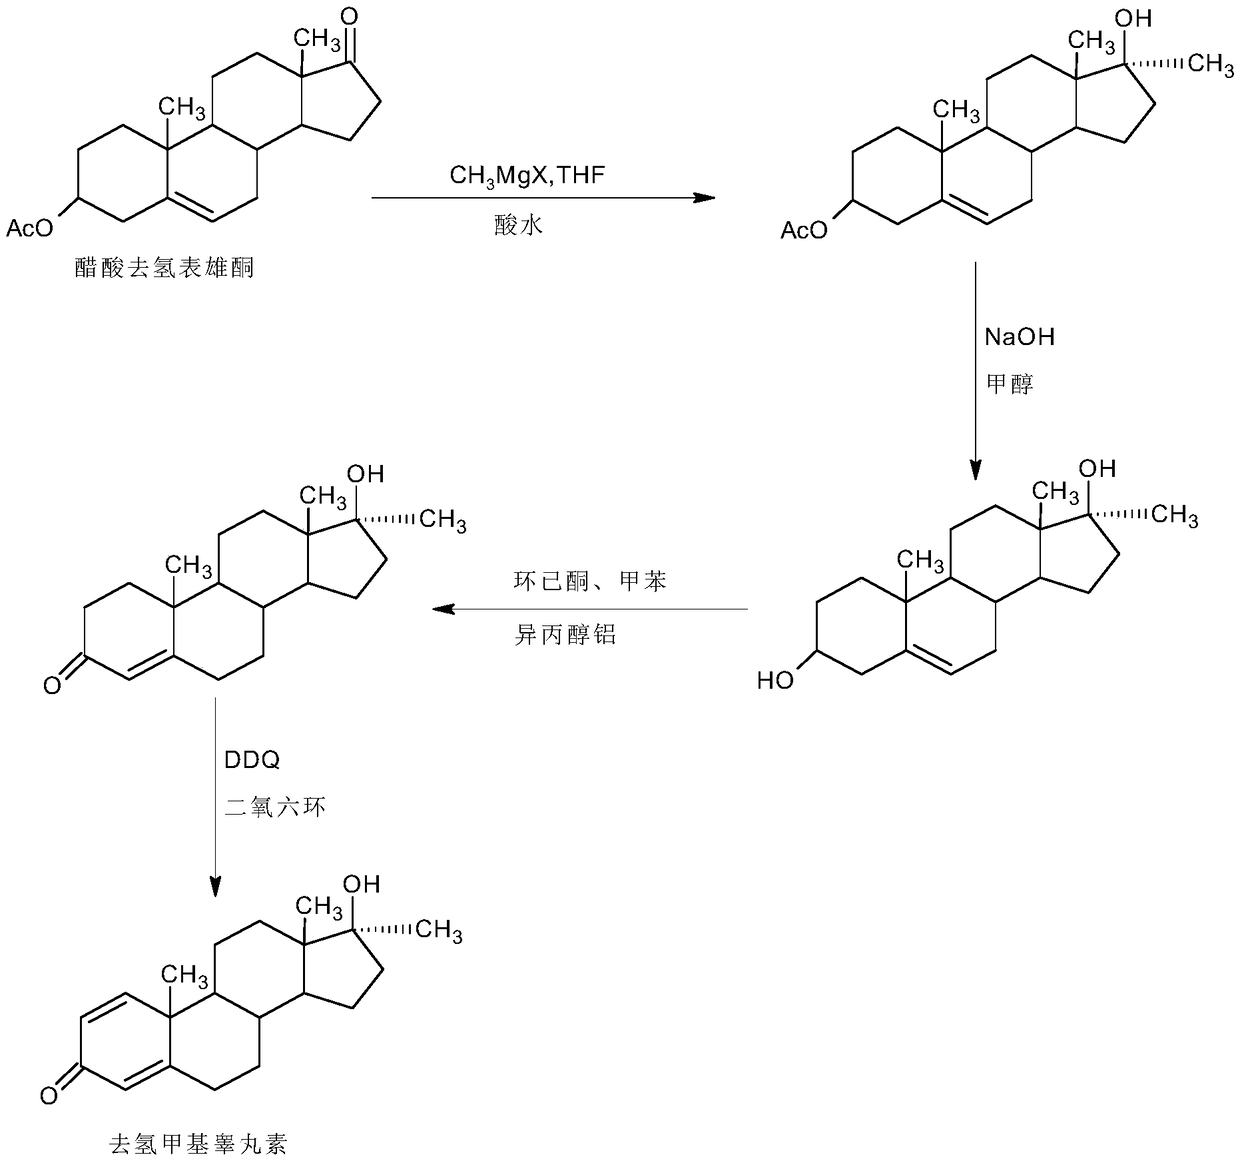 Method for preparing metandienone